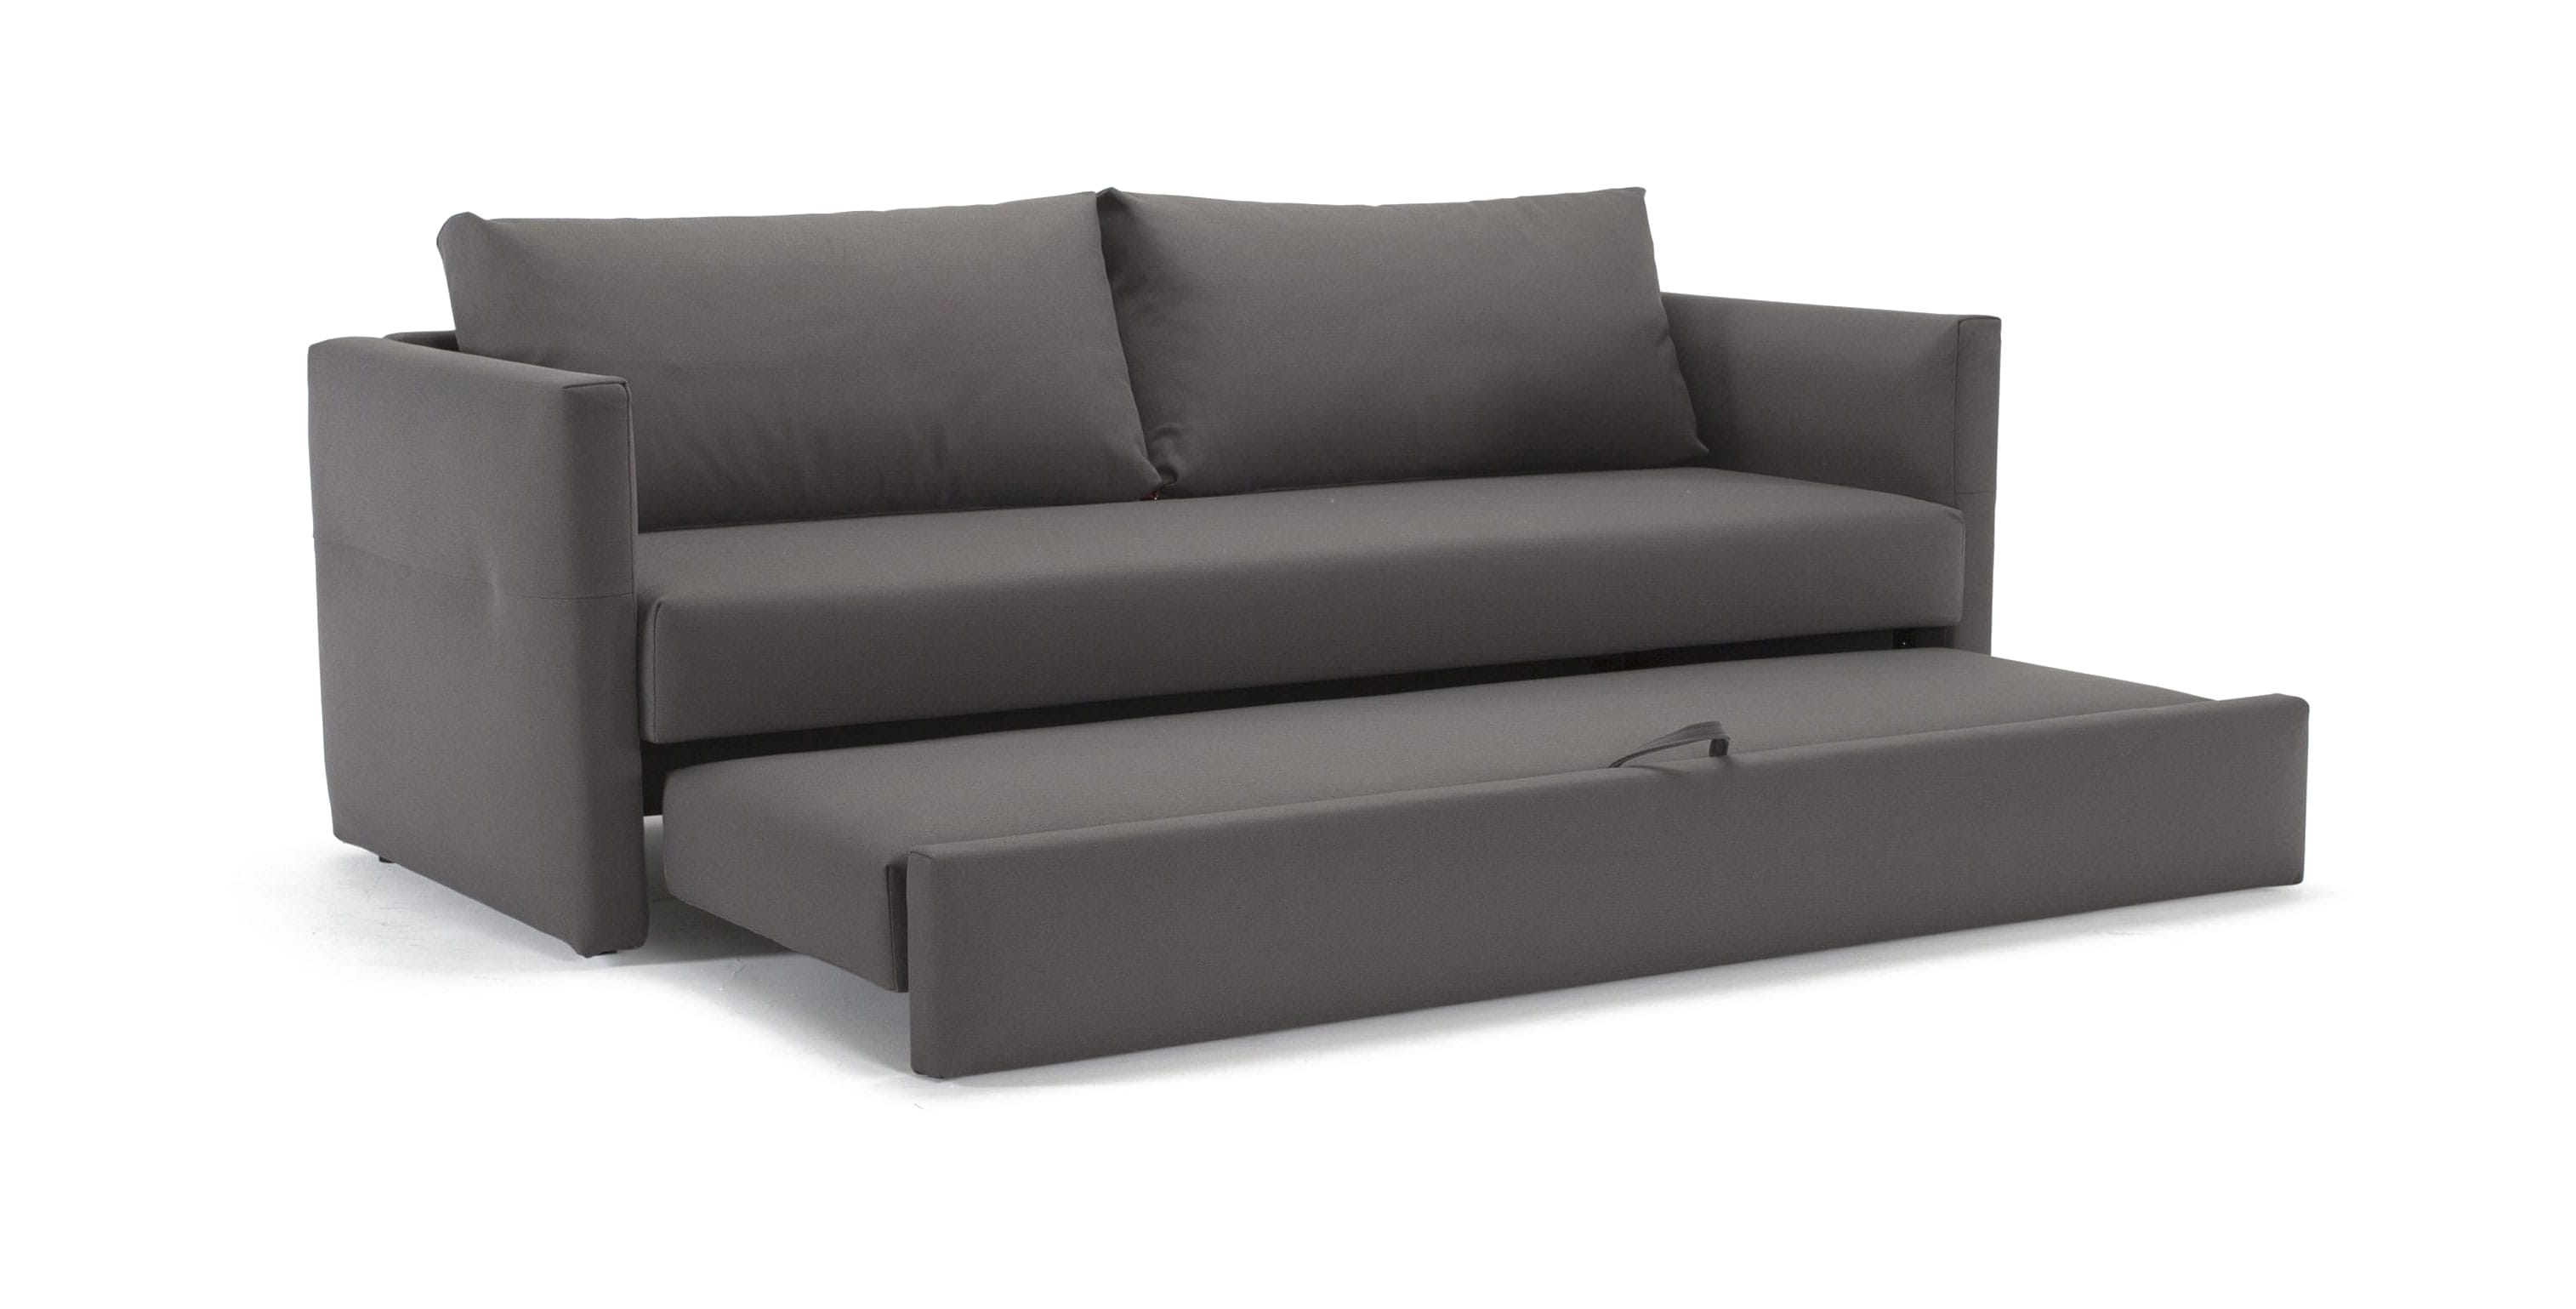 Sofa (Full Toke Size) Bed Gray Coastal Seal Innovation by